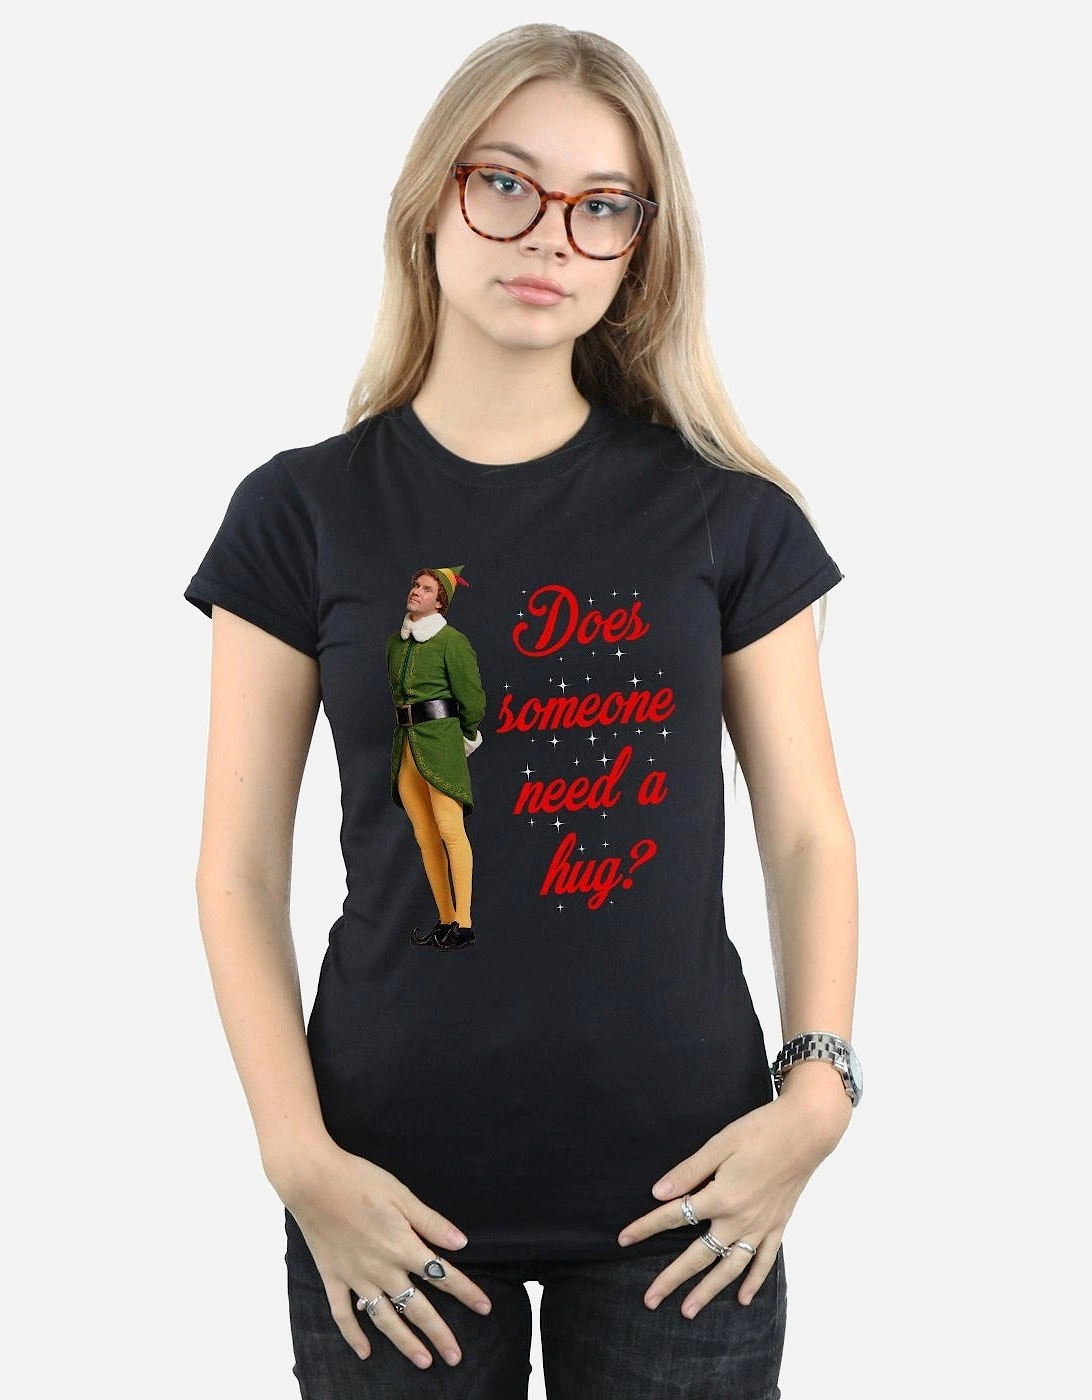 Womens/Ladies Hug Buddy Cotton T-Shirt